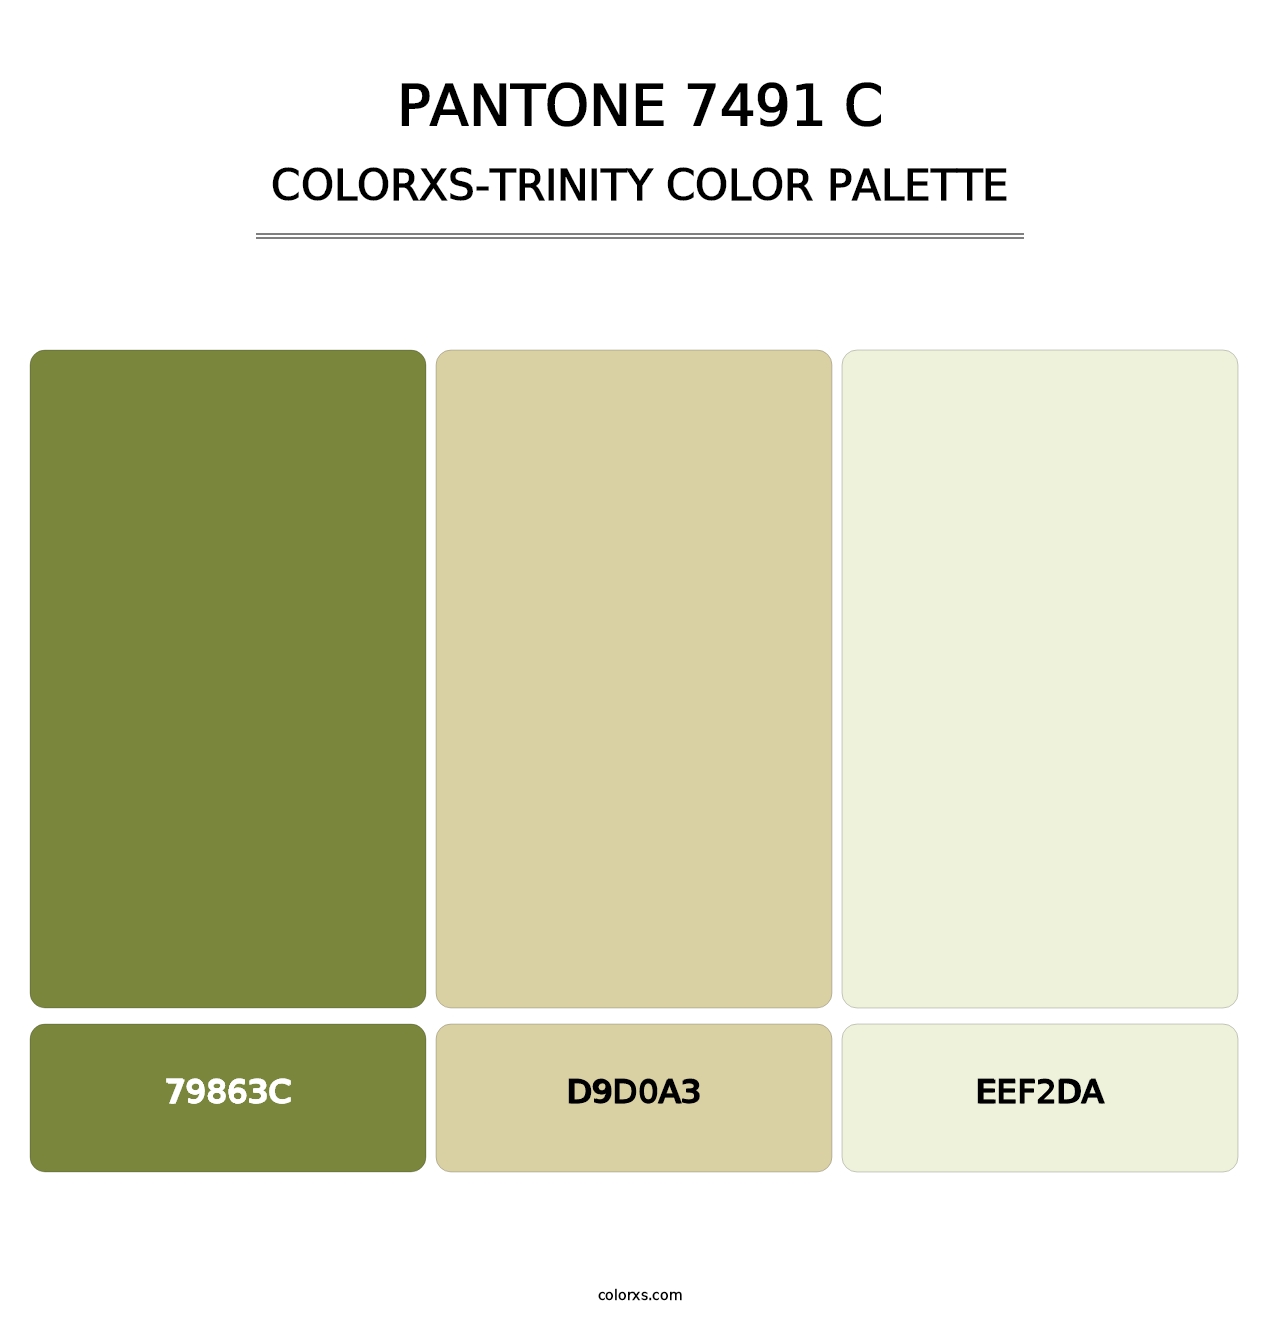 PANTONE 7491 C - Colorxs Trinity Palette